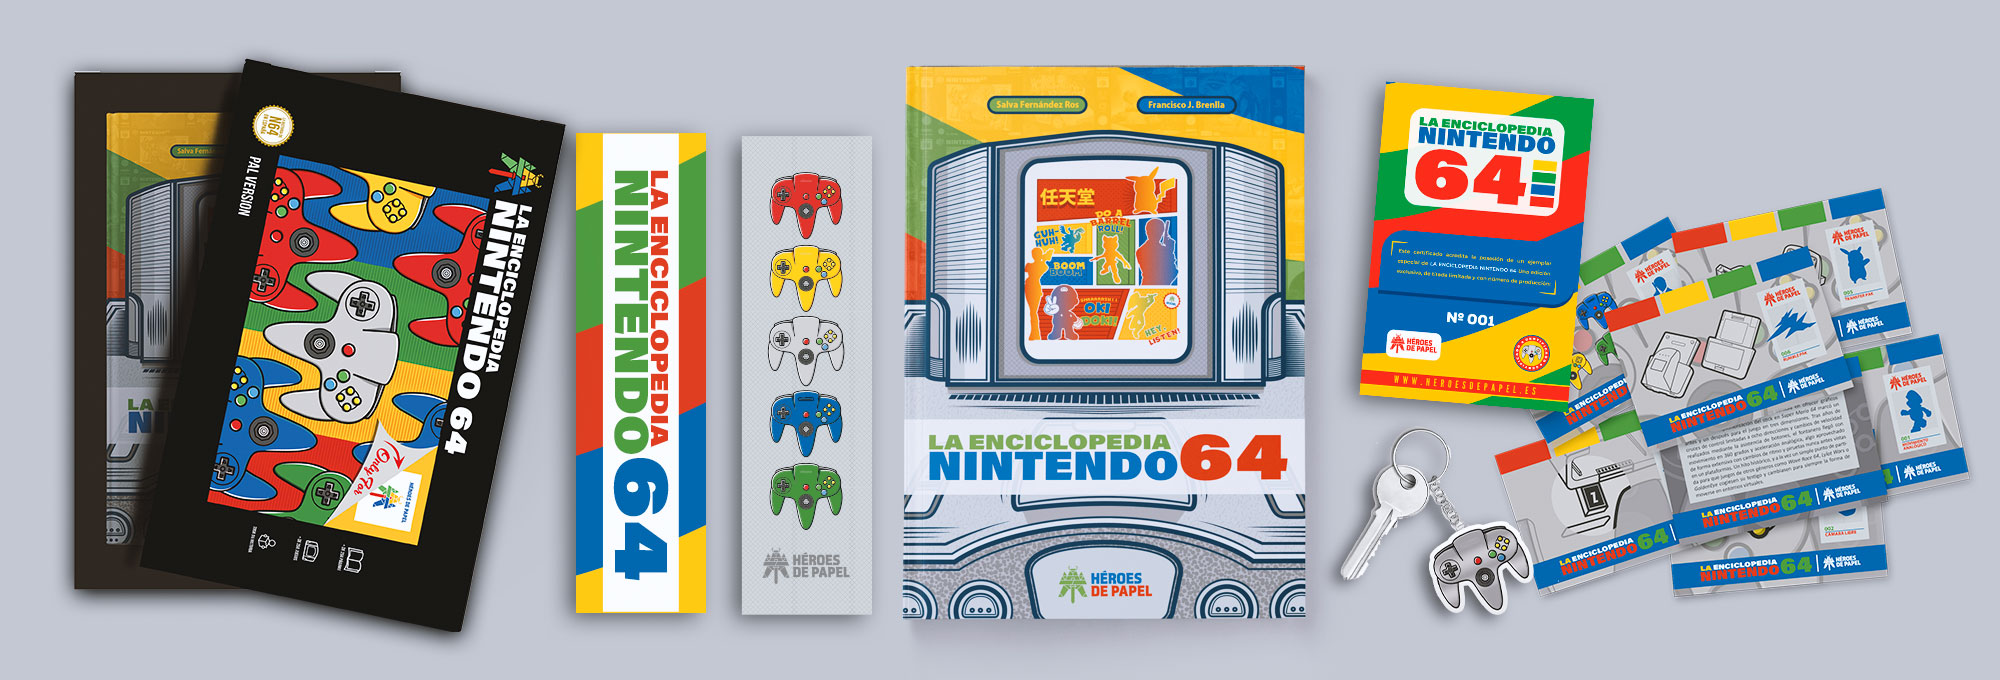 La Enciclopedia Nintendo 64 